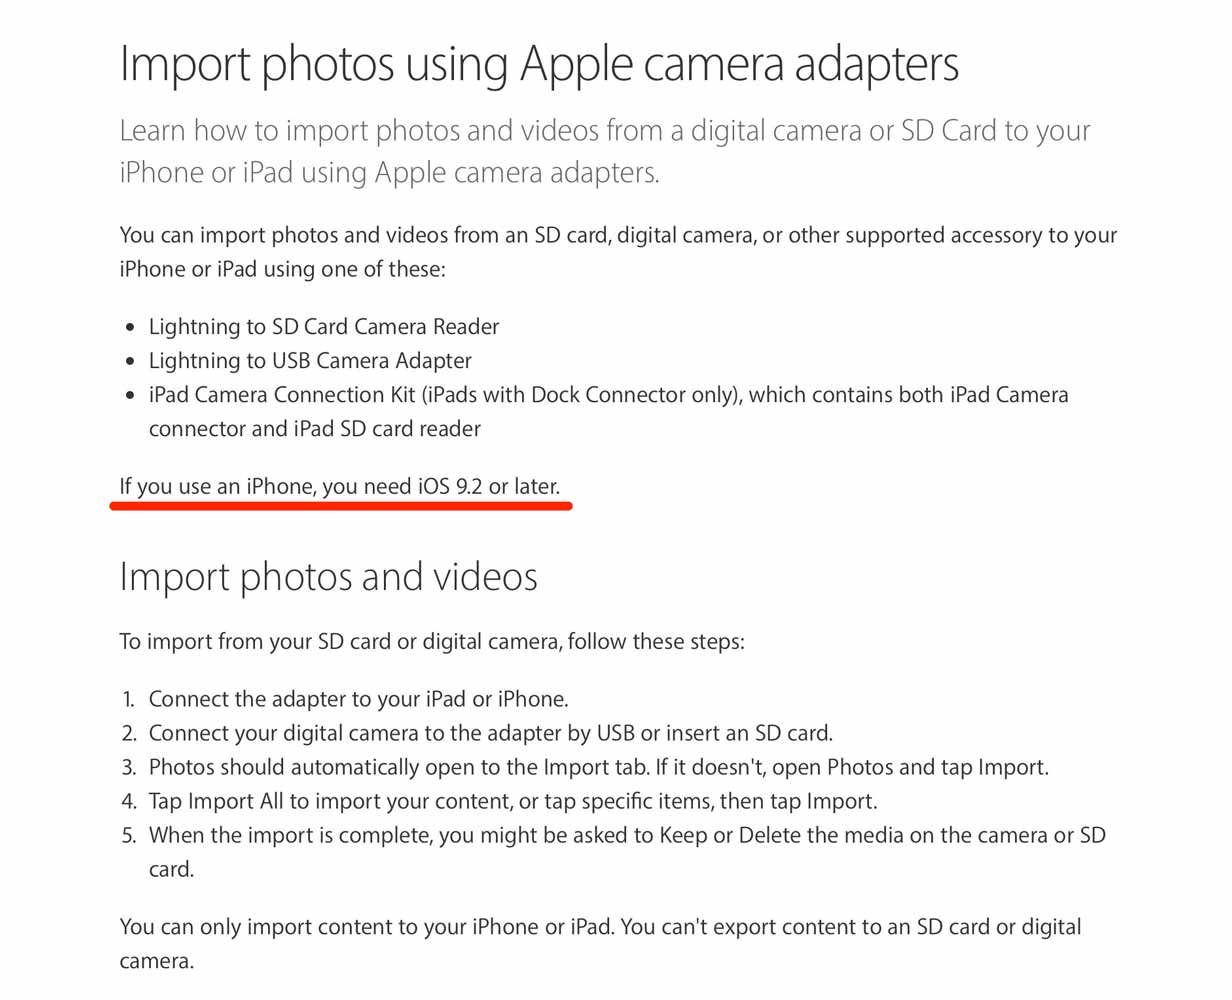 「iOS 9.2」からiPhoneで「Lightning – SDカードカメラリーダー」と「Lightning &#8211; USBカメラアダプタ」が利用可能に